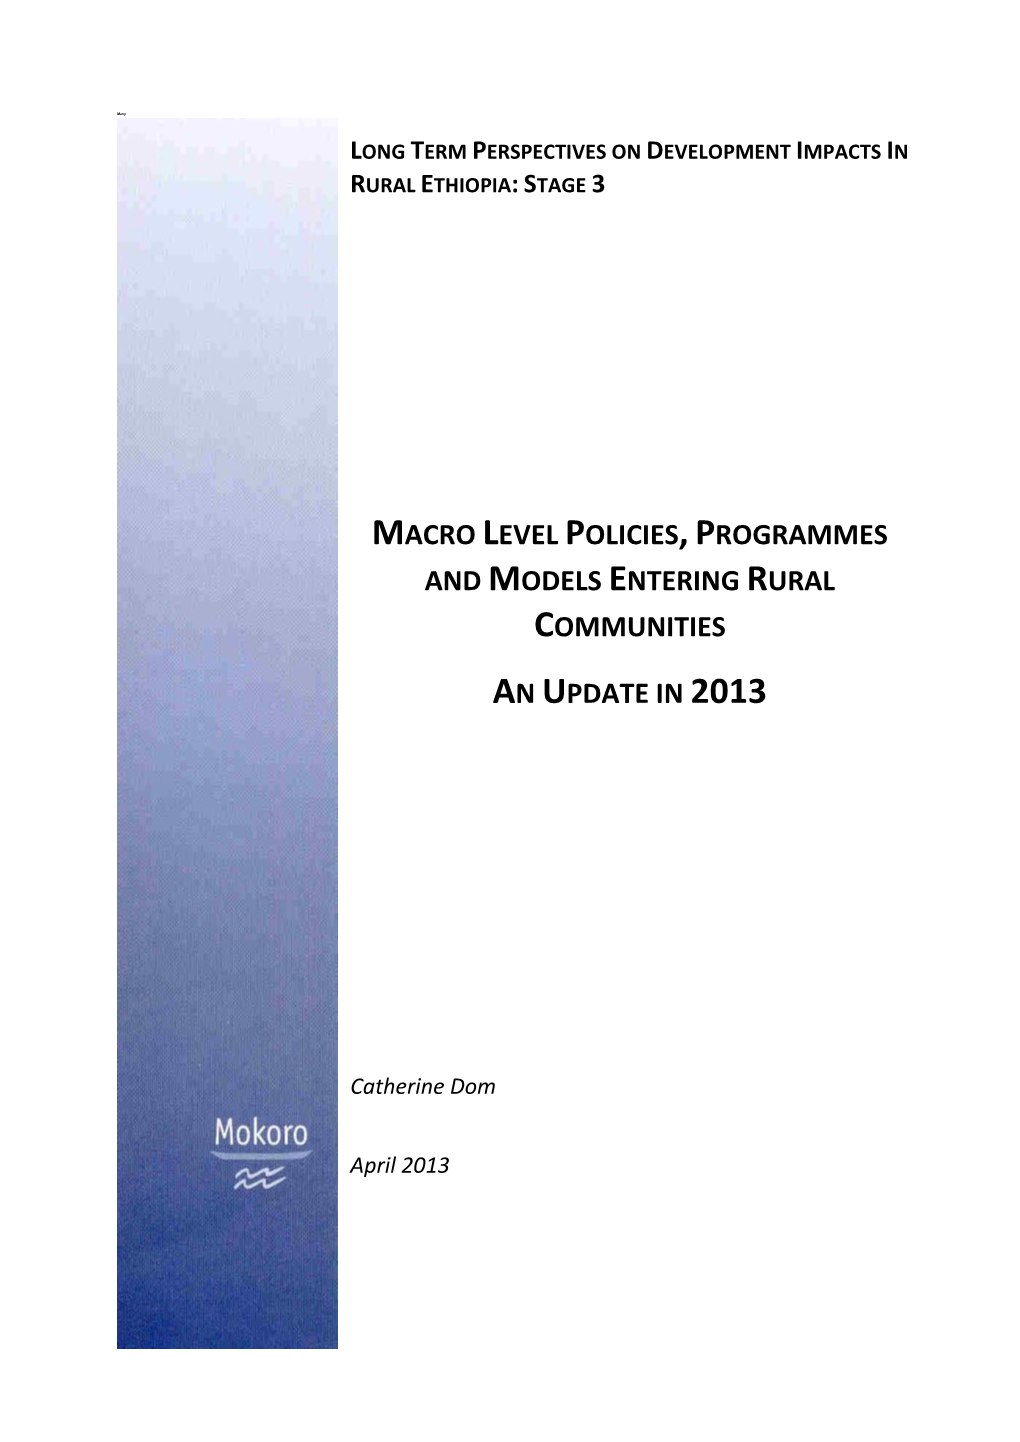 Macro Policies, Programmes and Models Entering Rural Communities